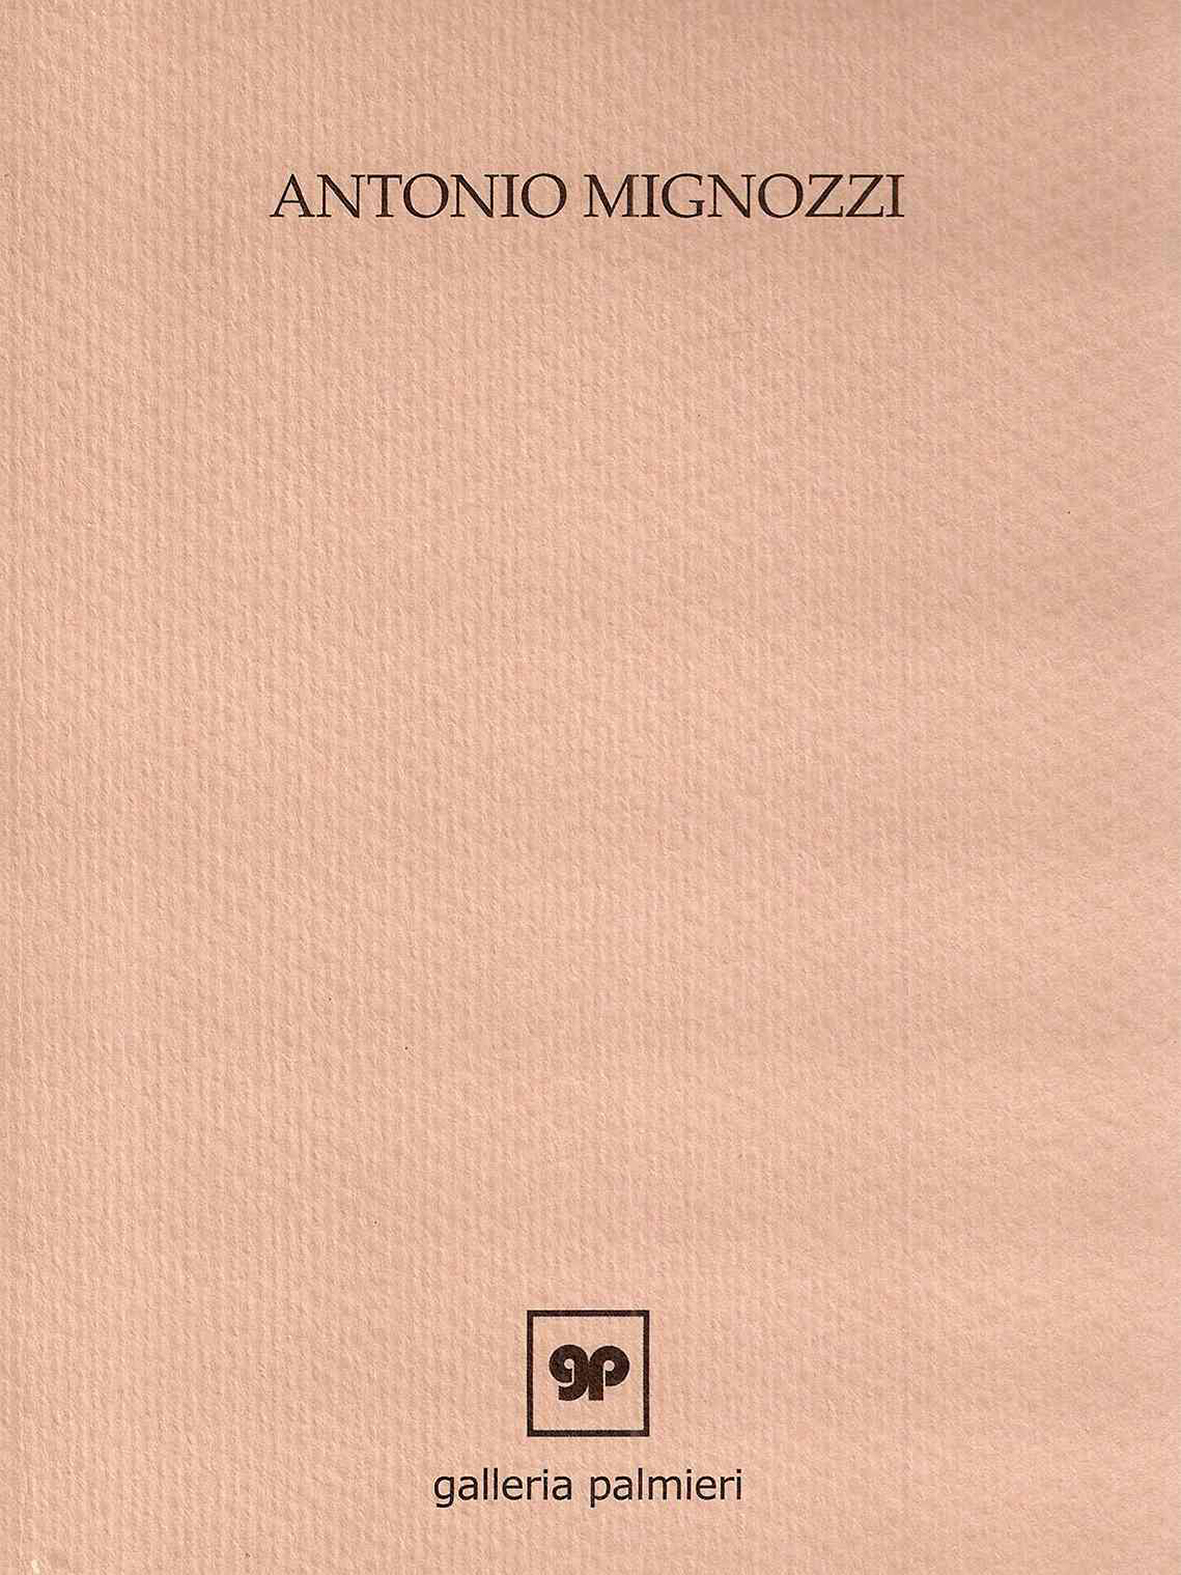 Antonio Mignozzi